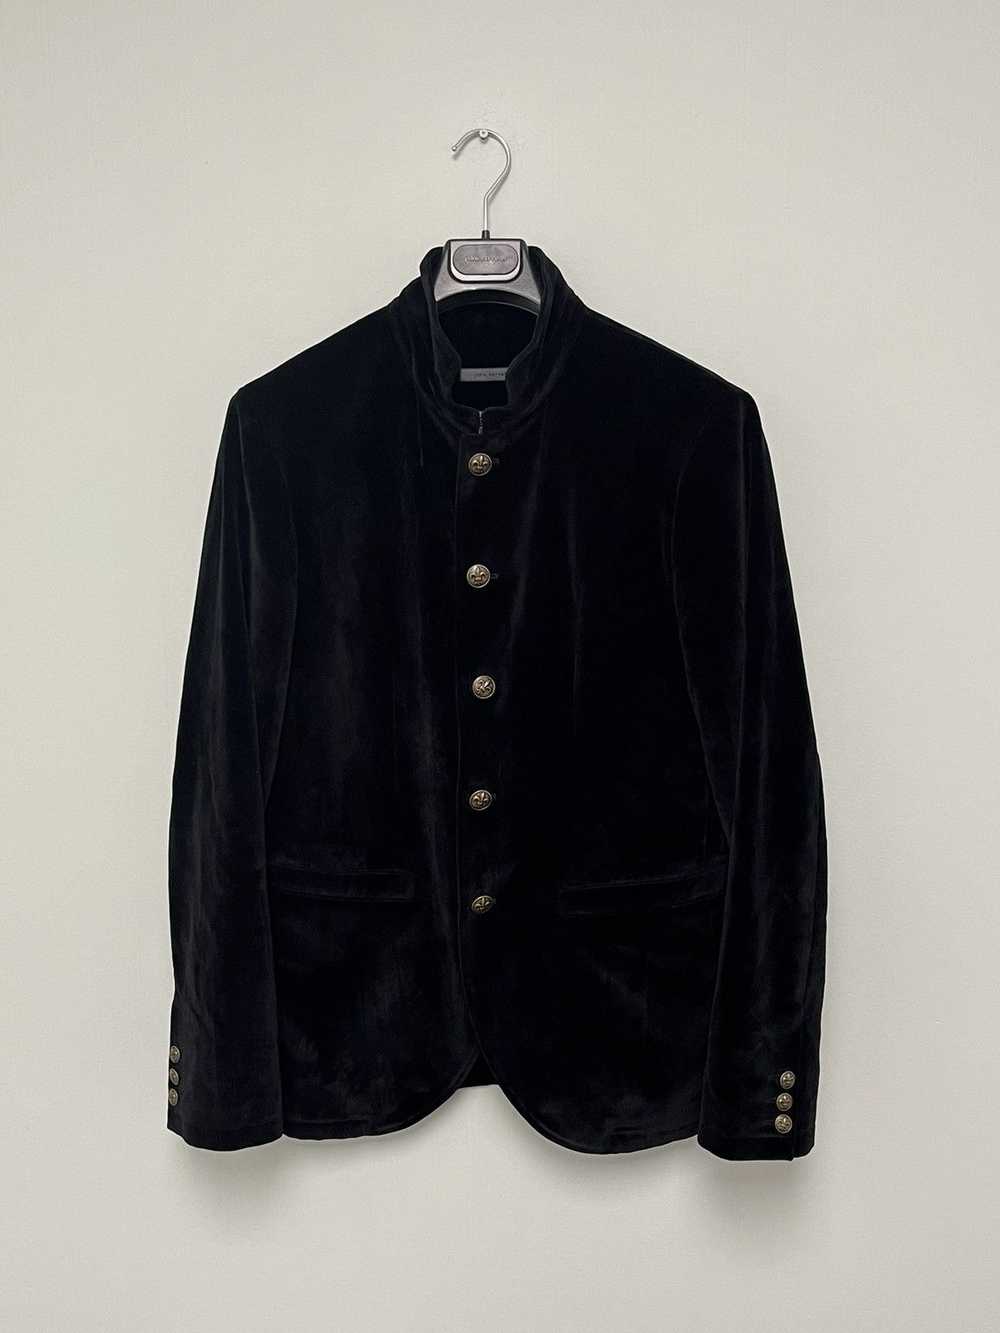 John Varvatos Crushed velvet jacket. Black. 50 - image 7